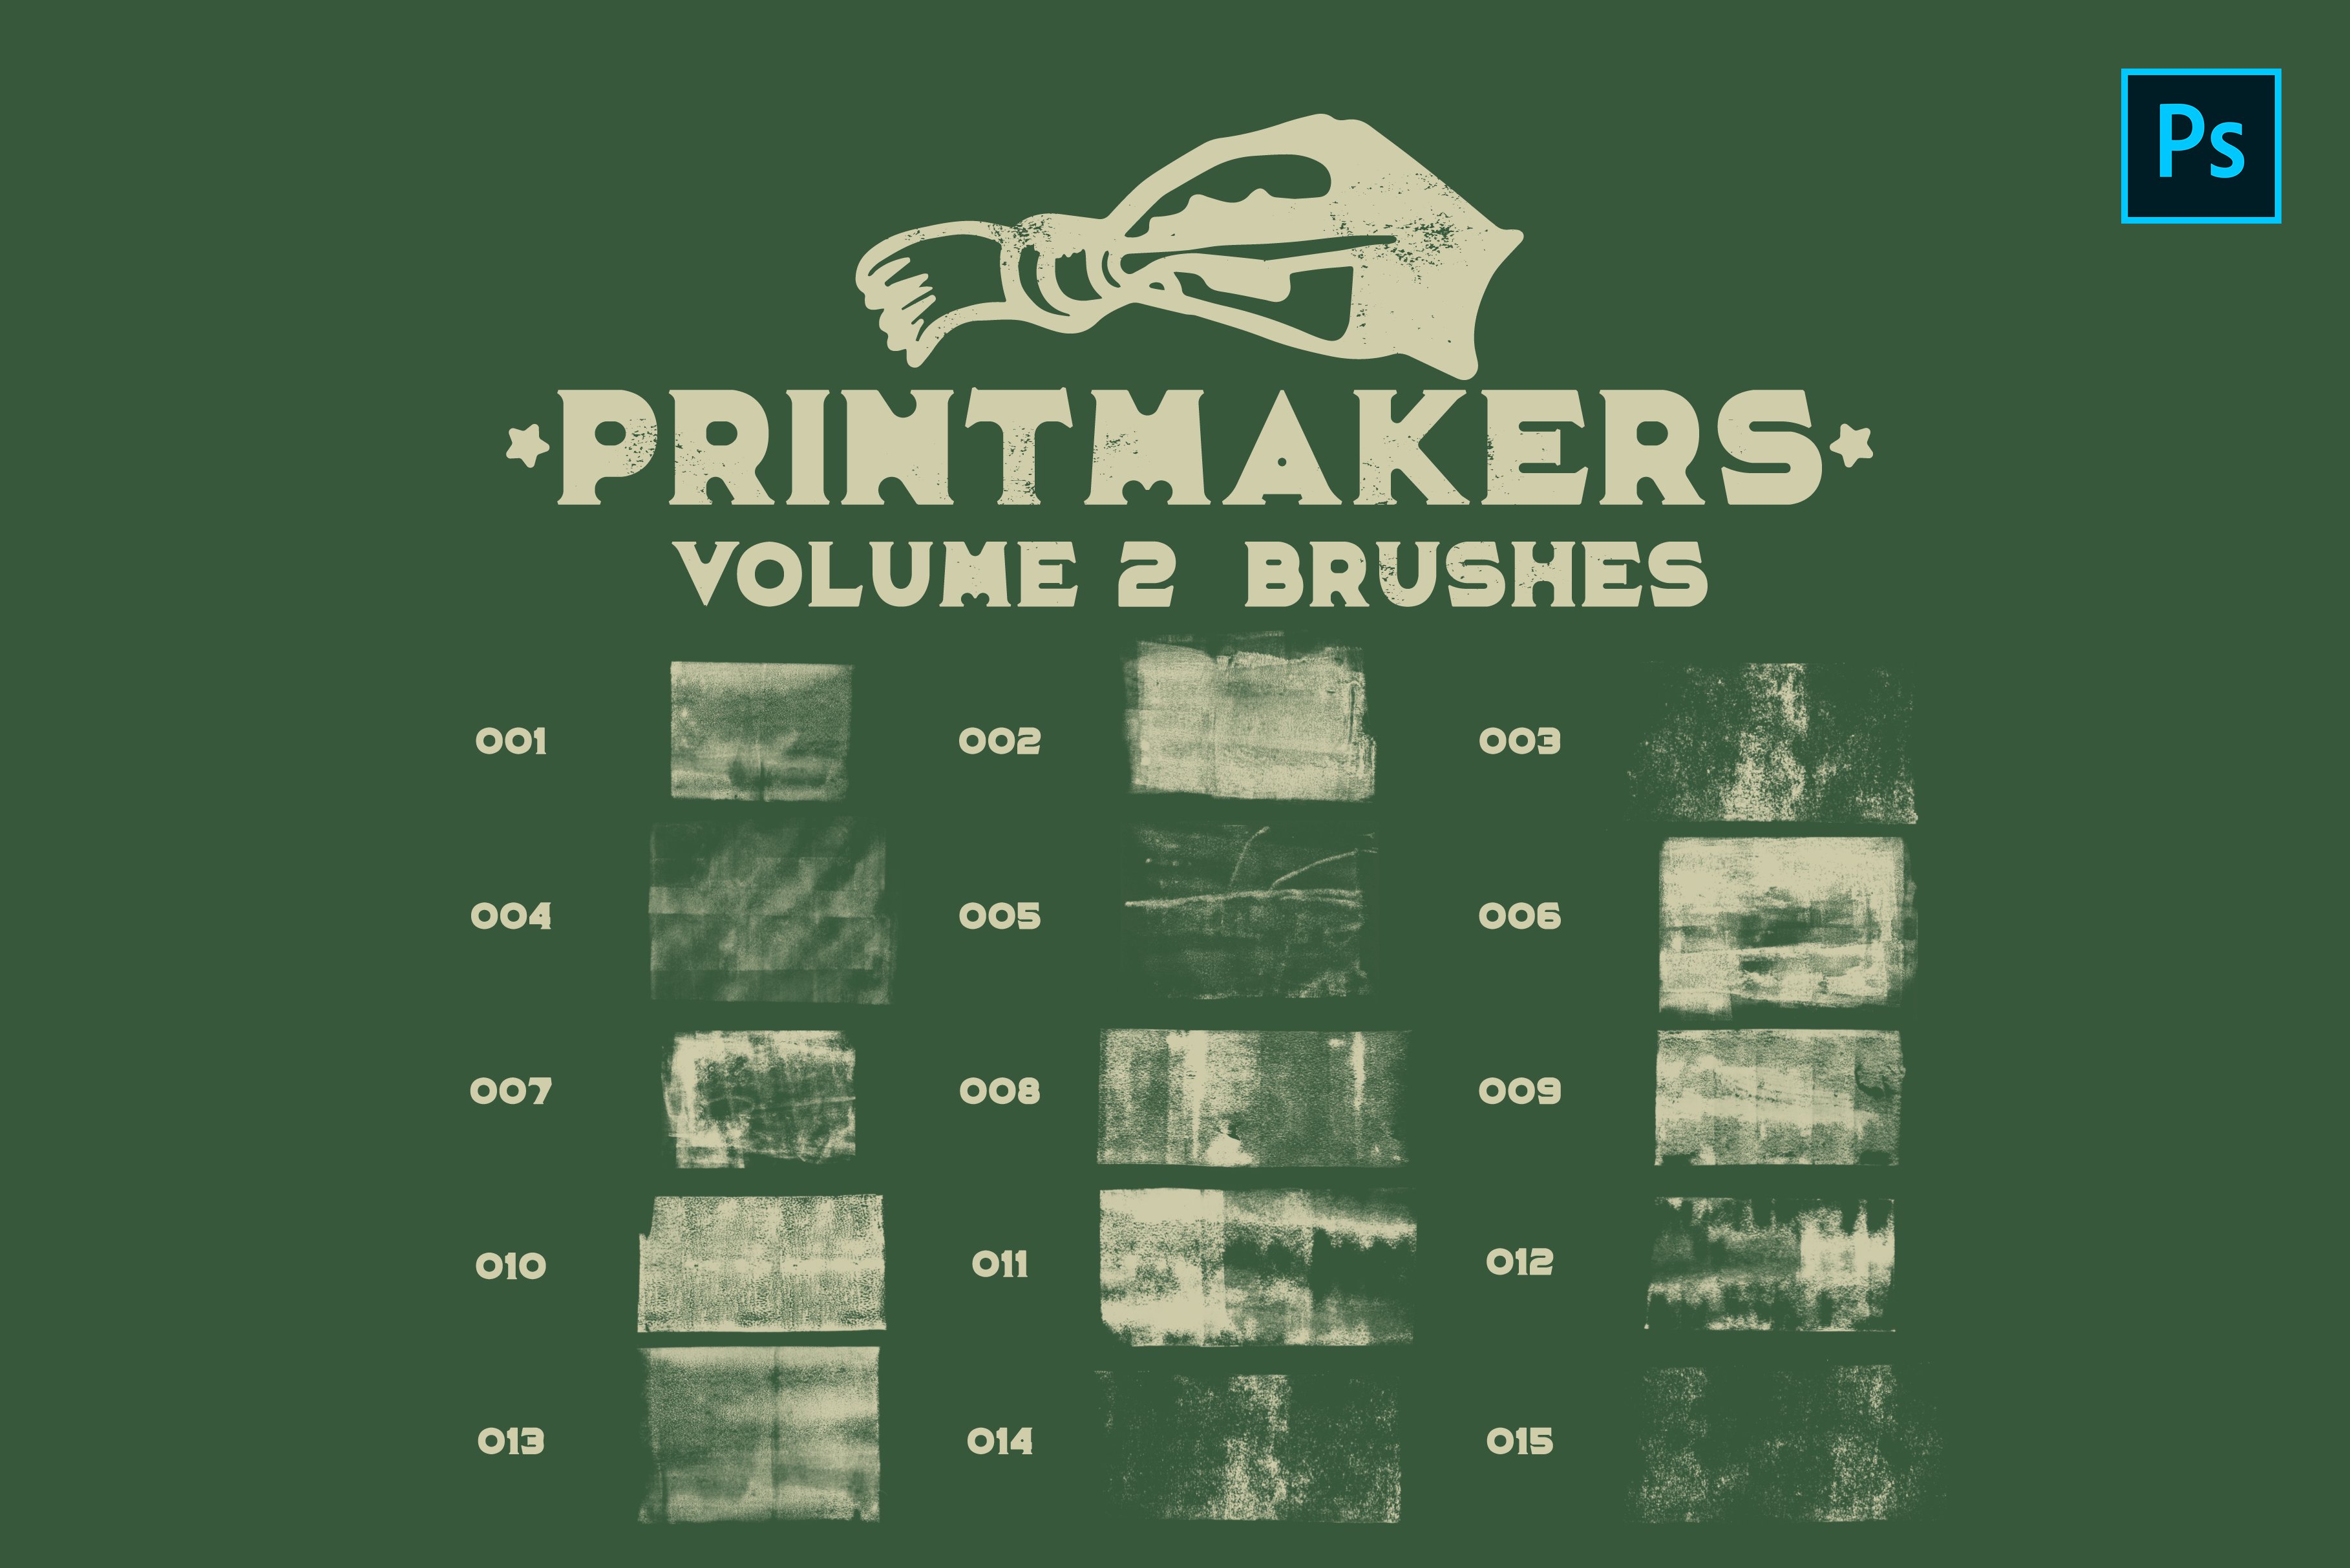 Vol.2 Printmakers Brushescover image.